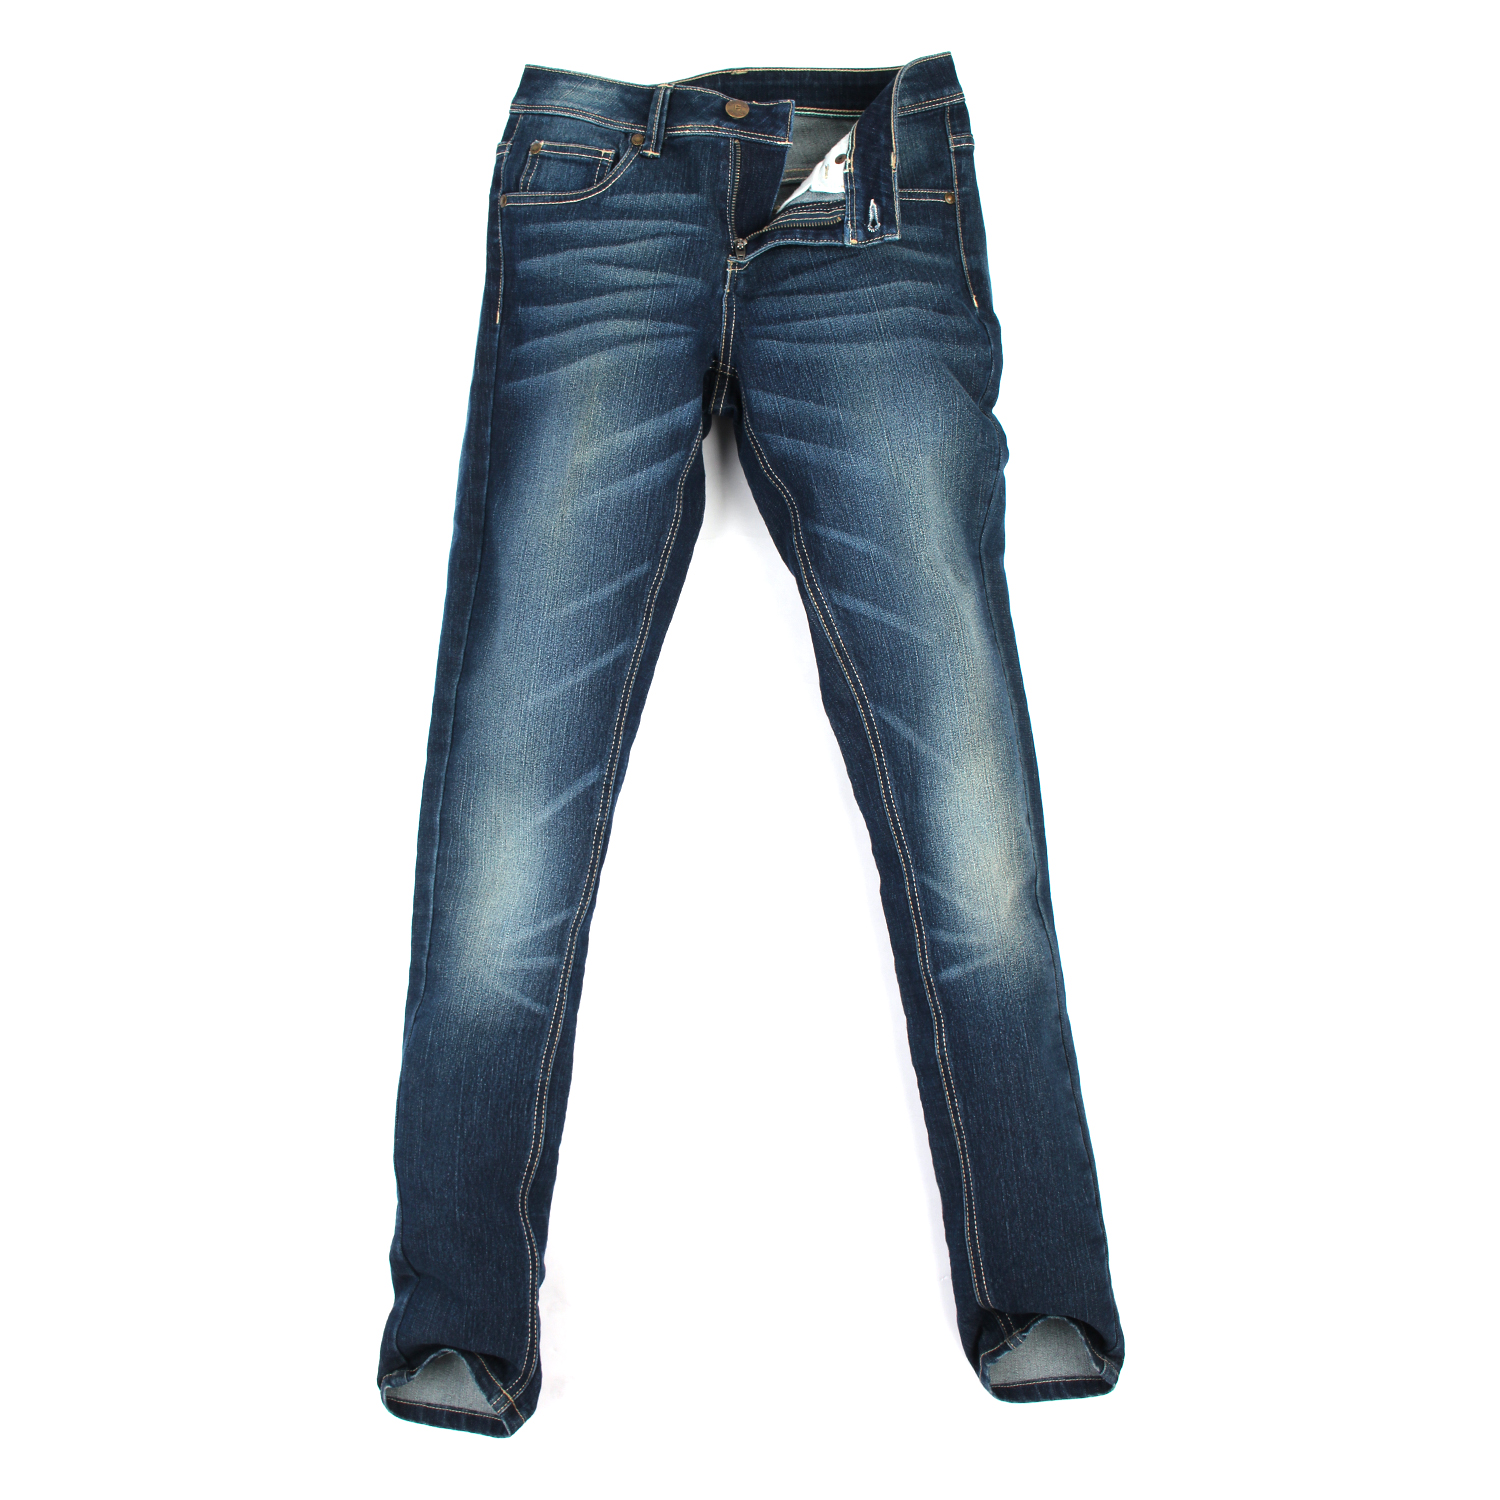 Yester Group International Jeans